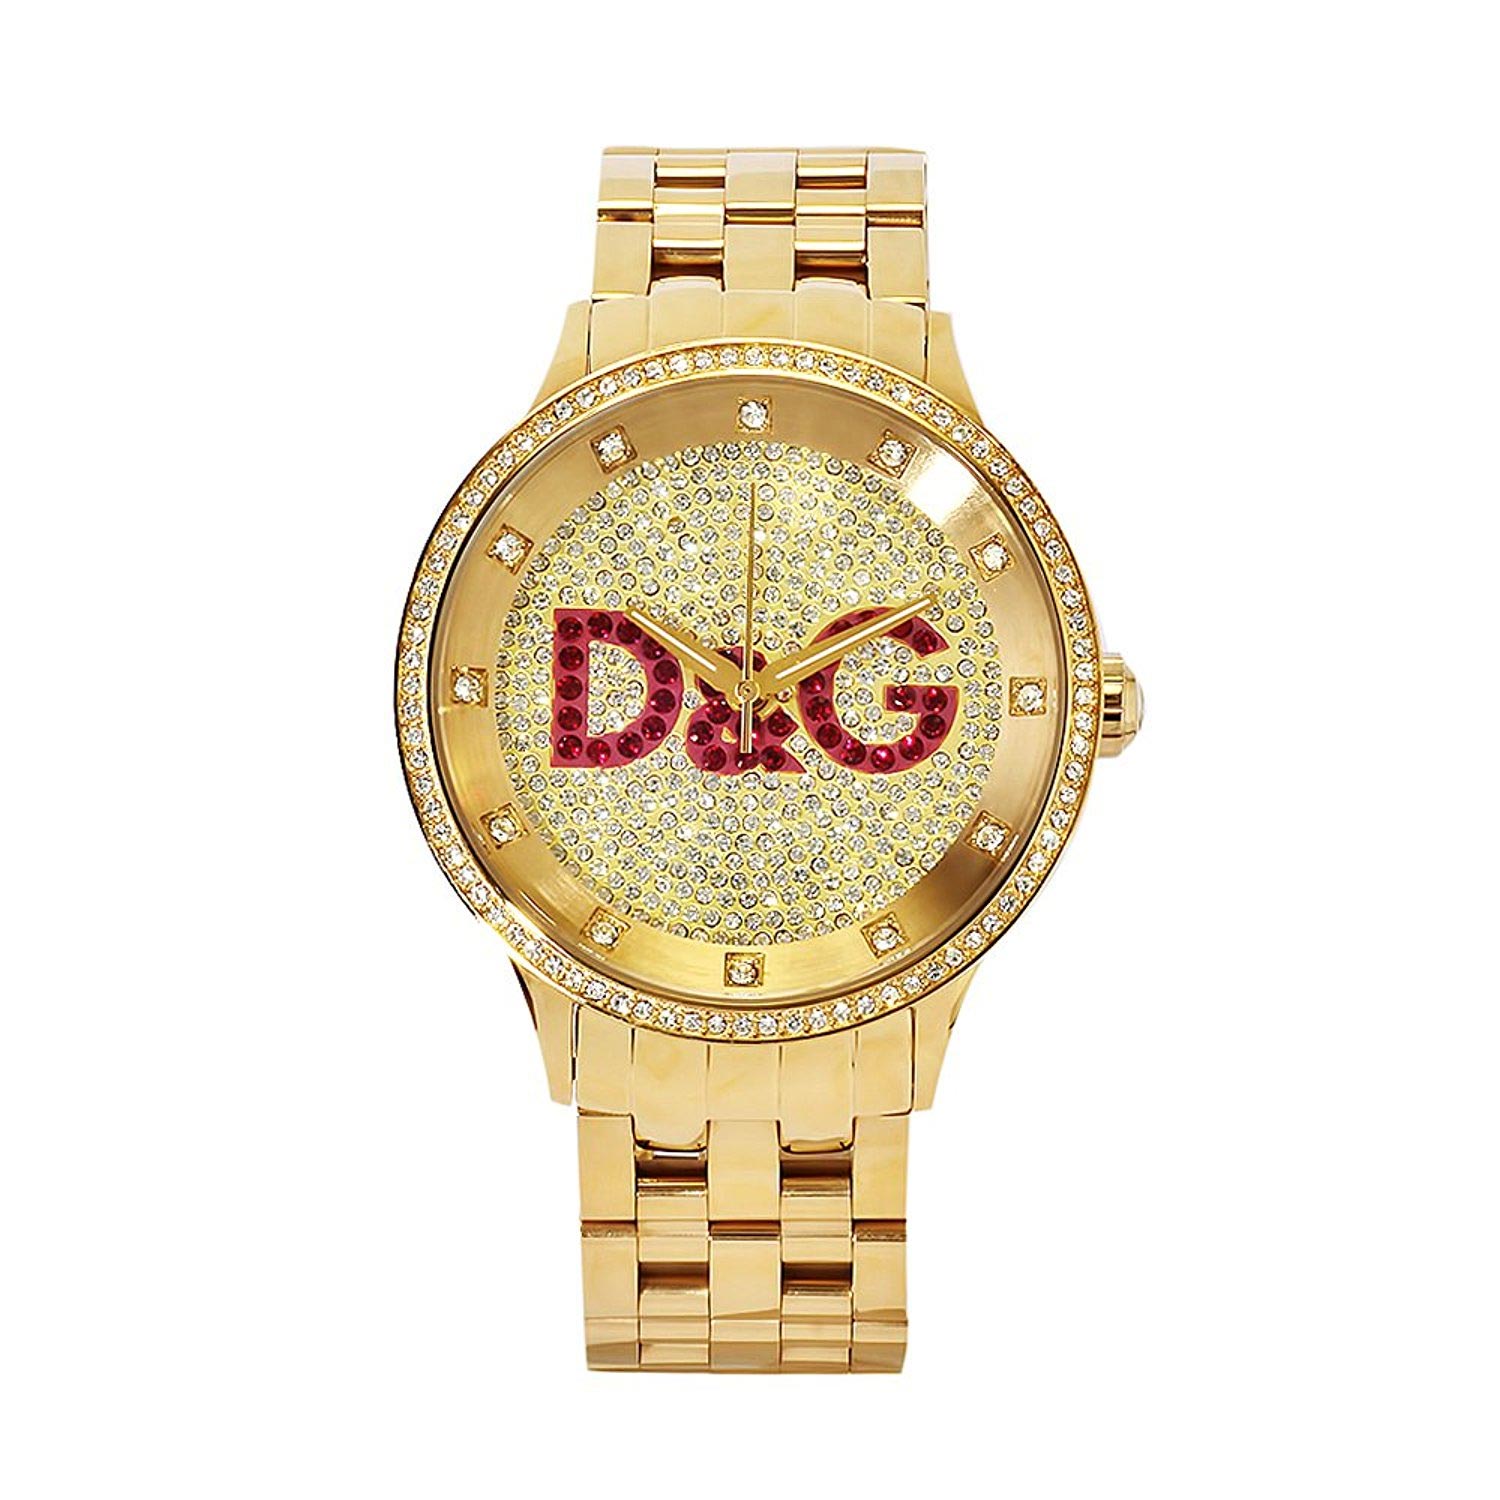 Dolce-&-Gabbana-goldene-Armbanduhr-DW0377-mit-Quarzuhrwerk-1